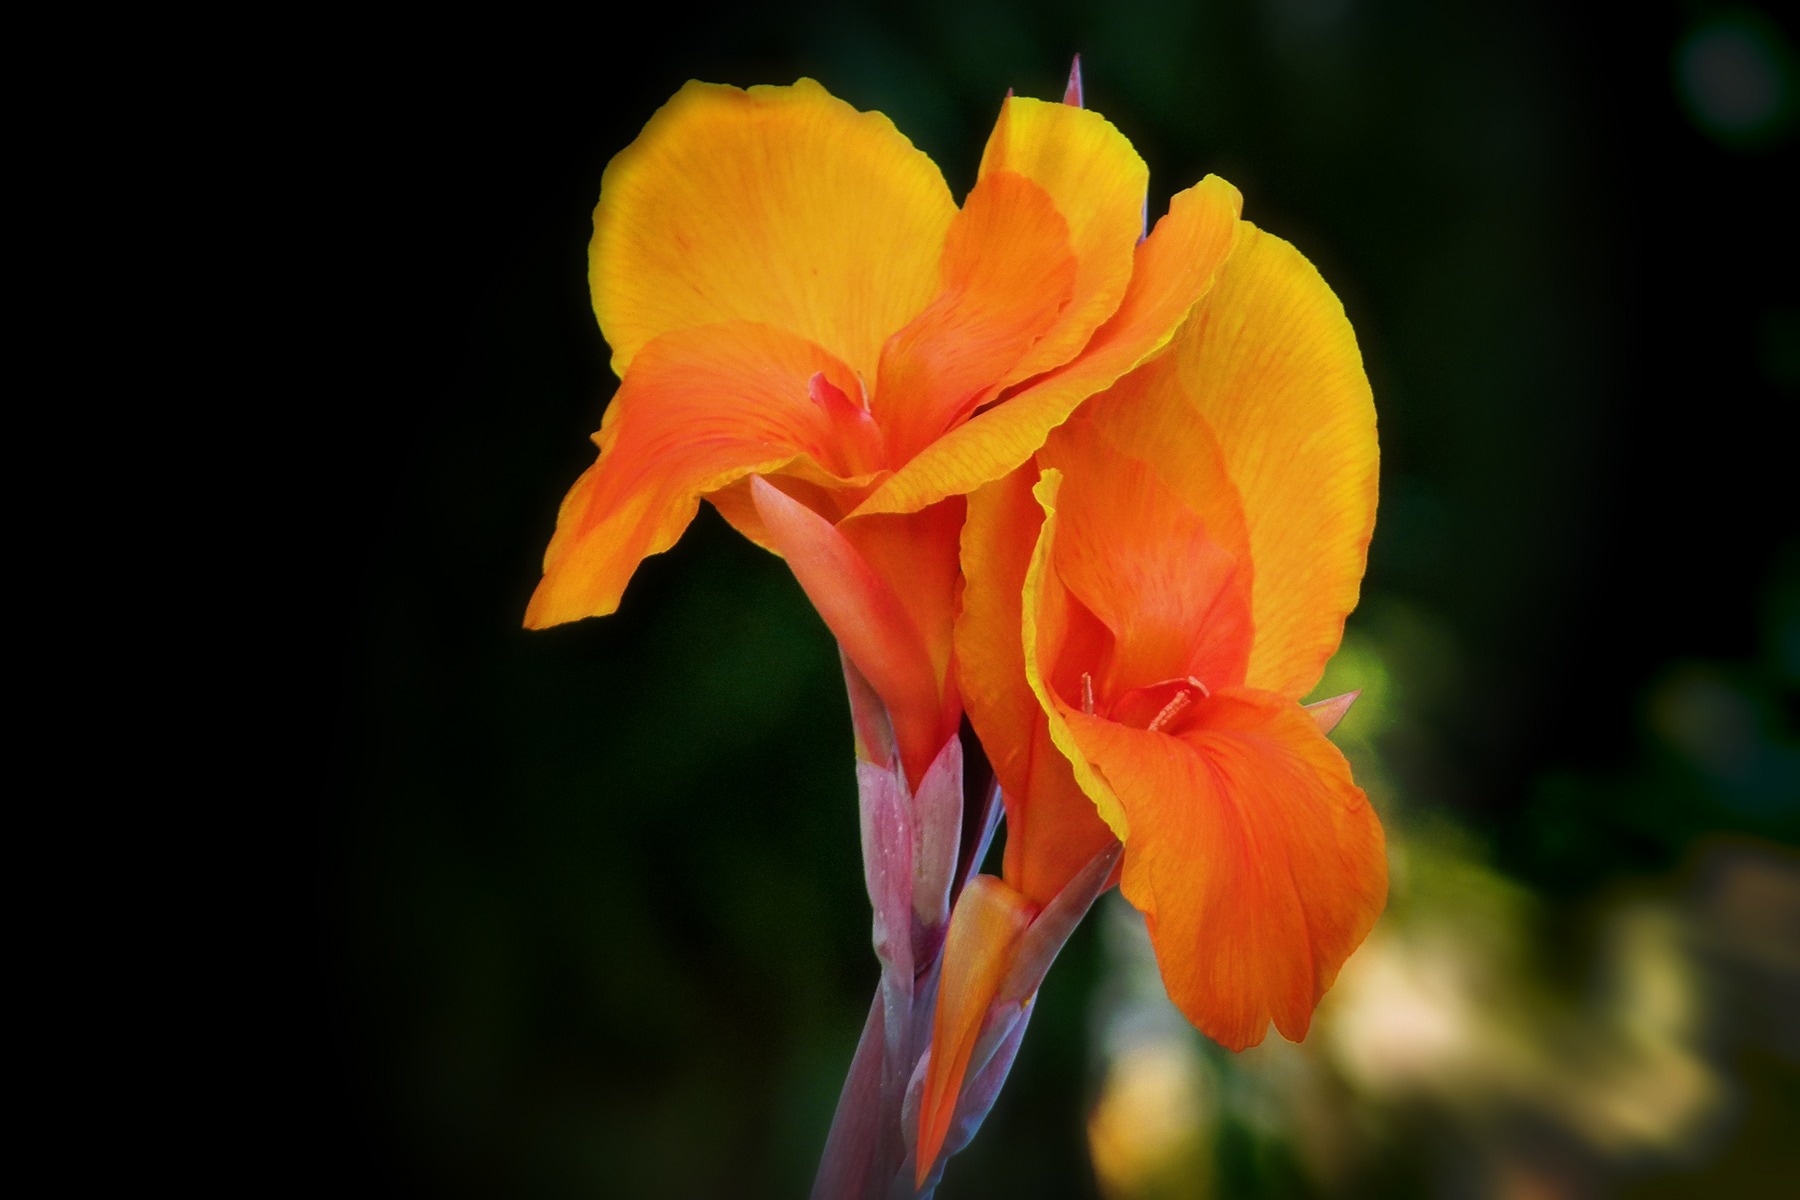 yellow orange petaled flower